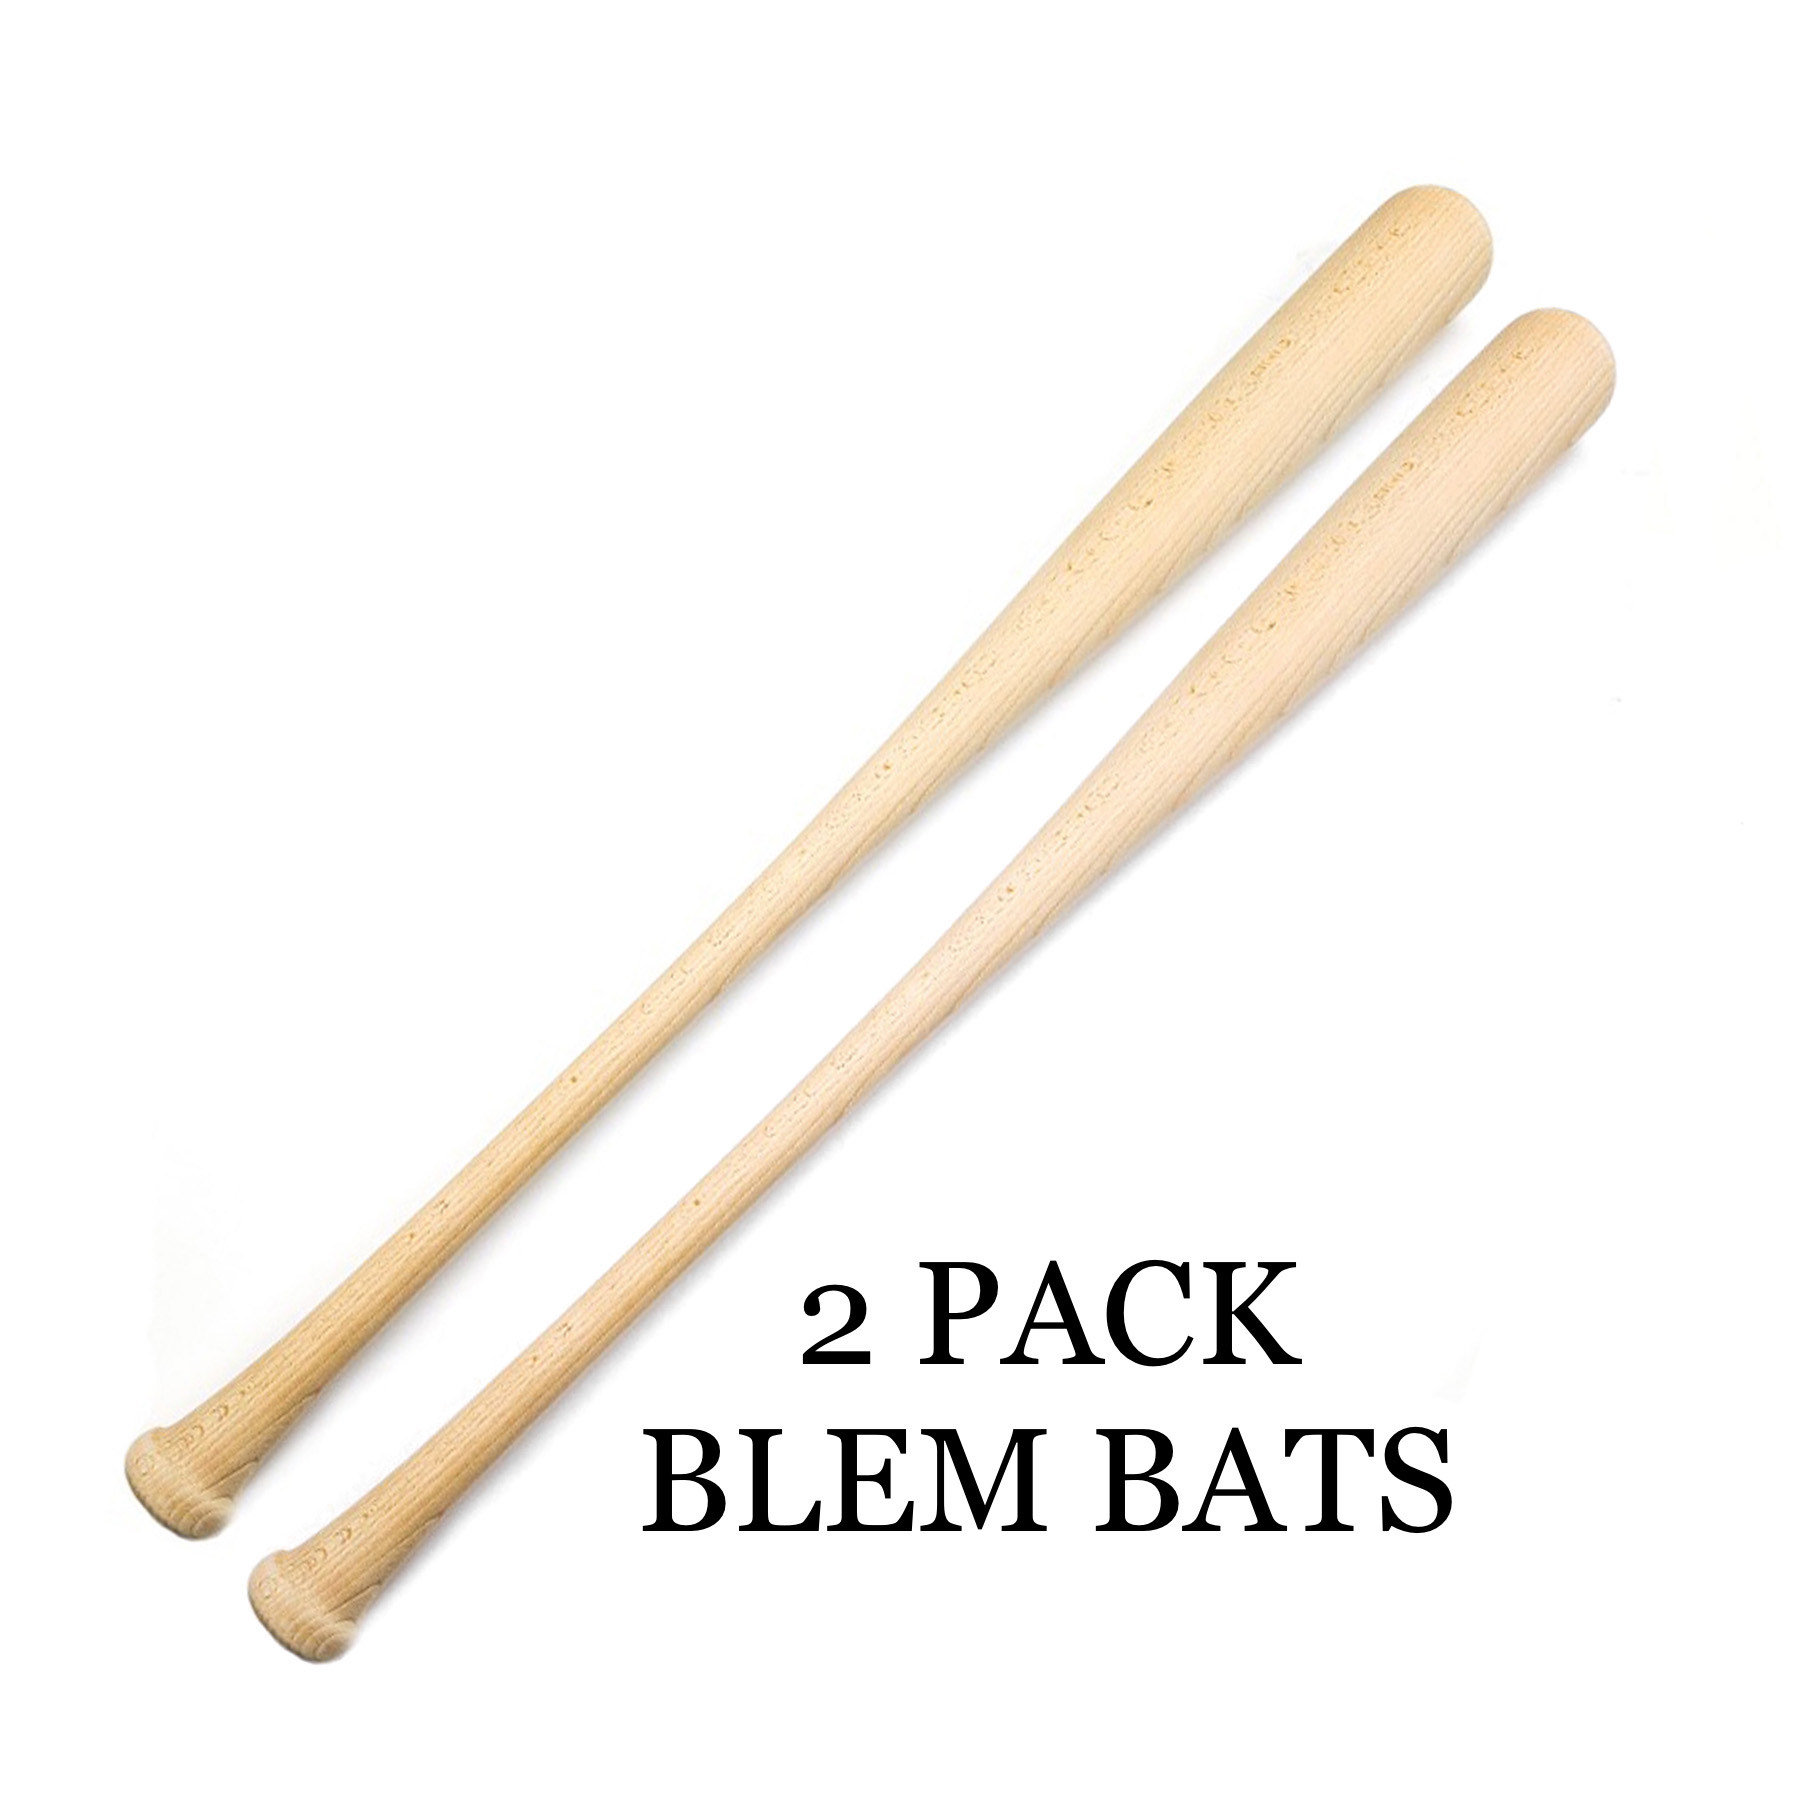 1 34" Wood Baseball Bats Ash Wood GAME READY Blem Cupped 